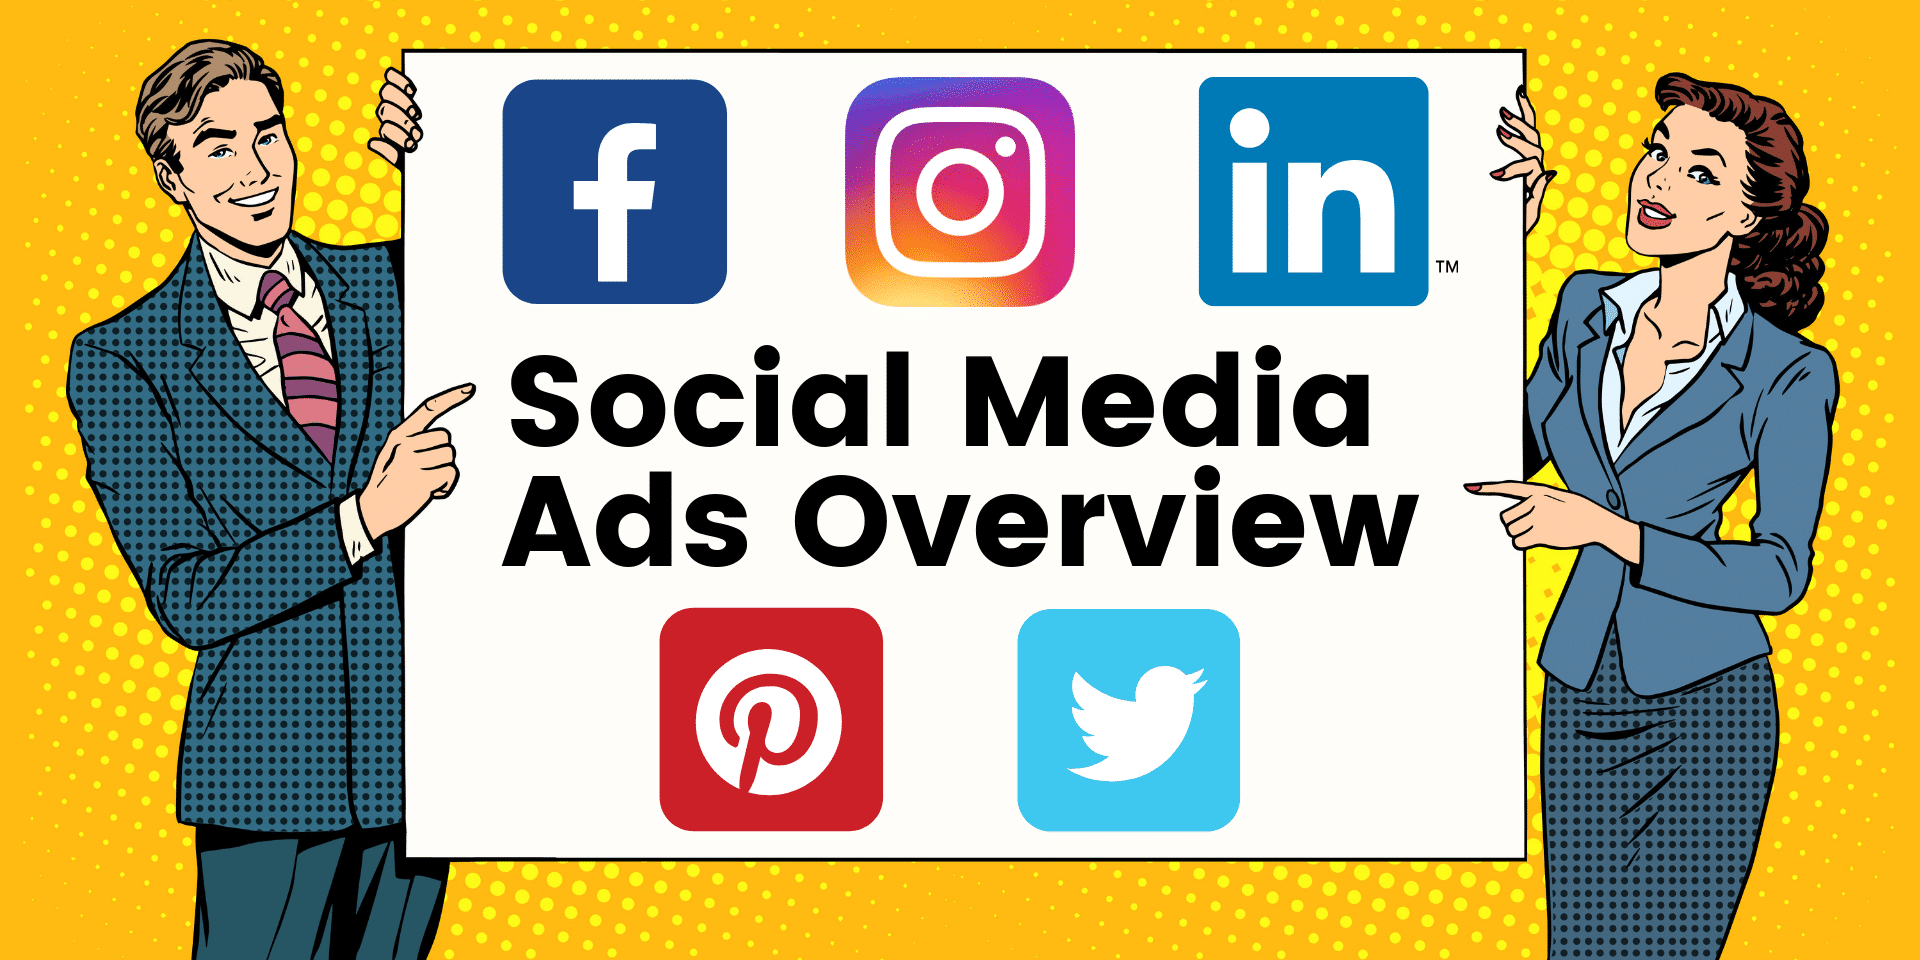 Social Media Ads for each platform